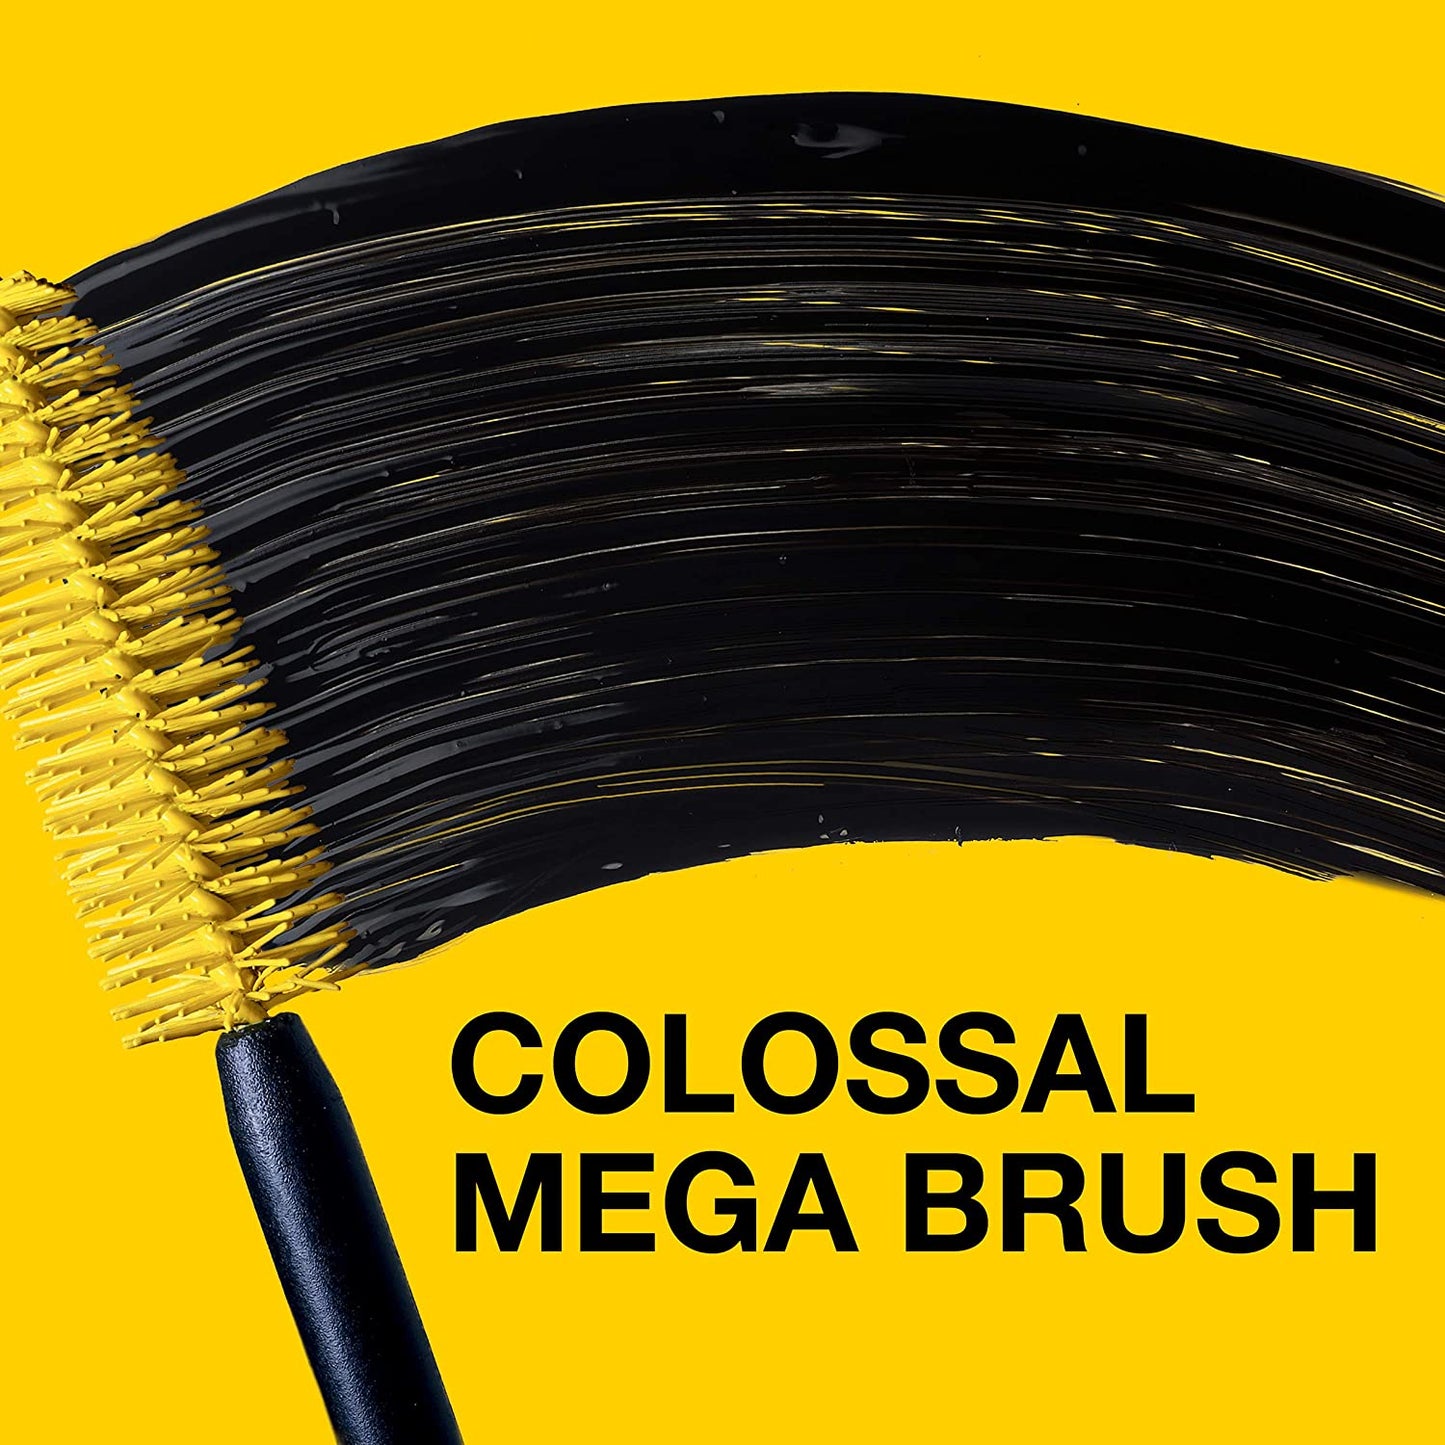 Maybelline New York Colossal Volume Express Mascara - 100% Black